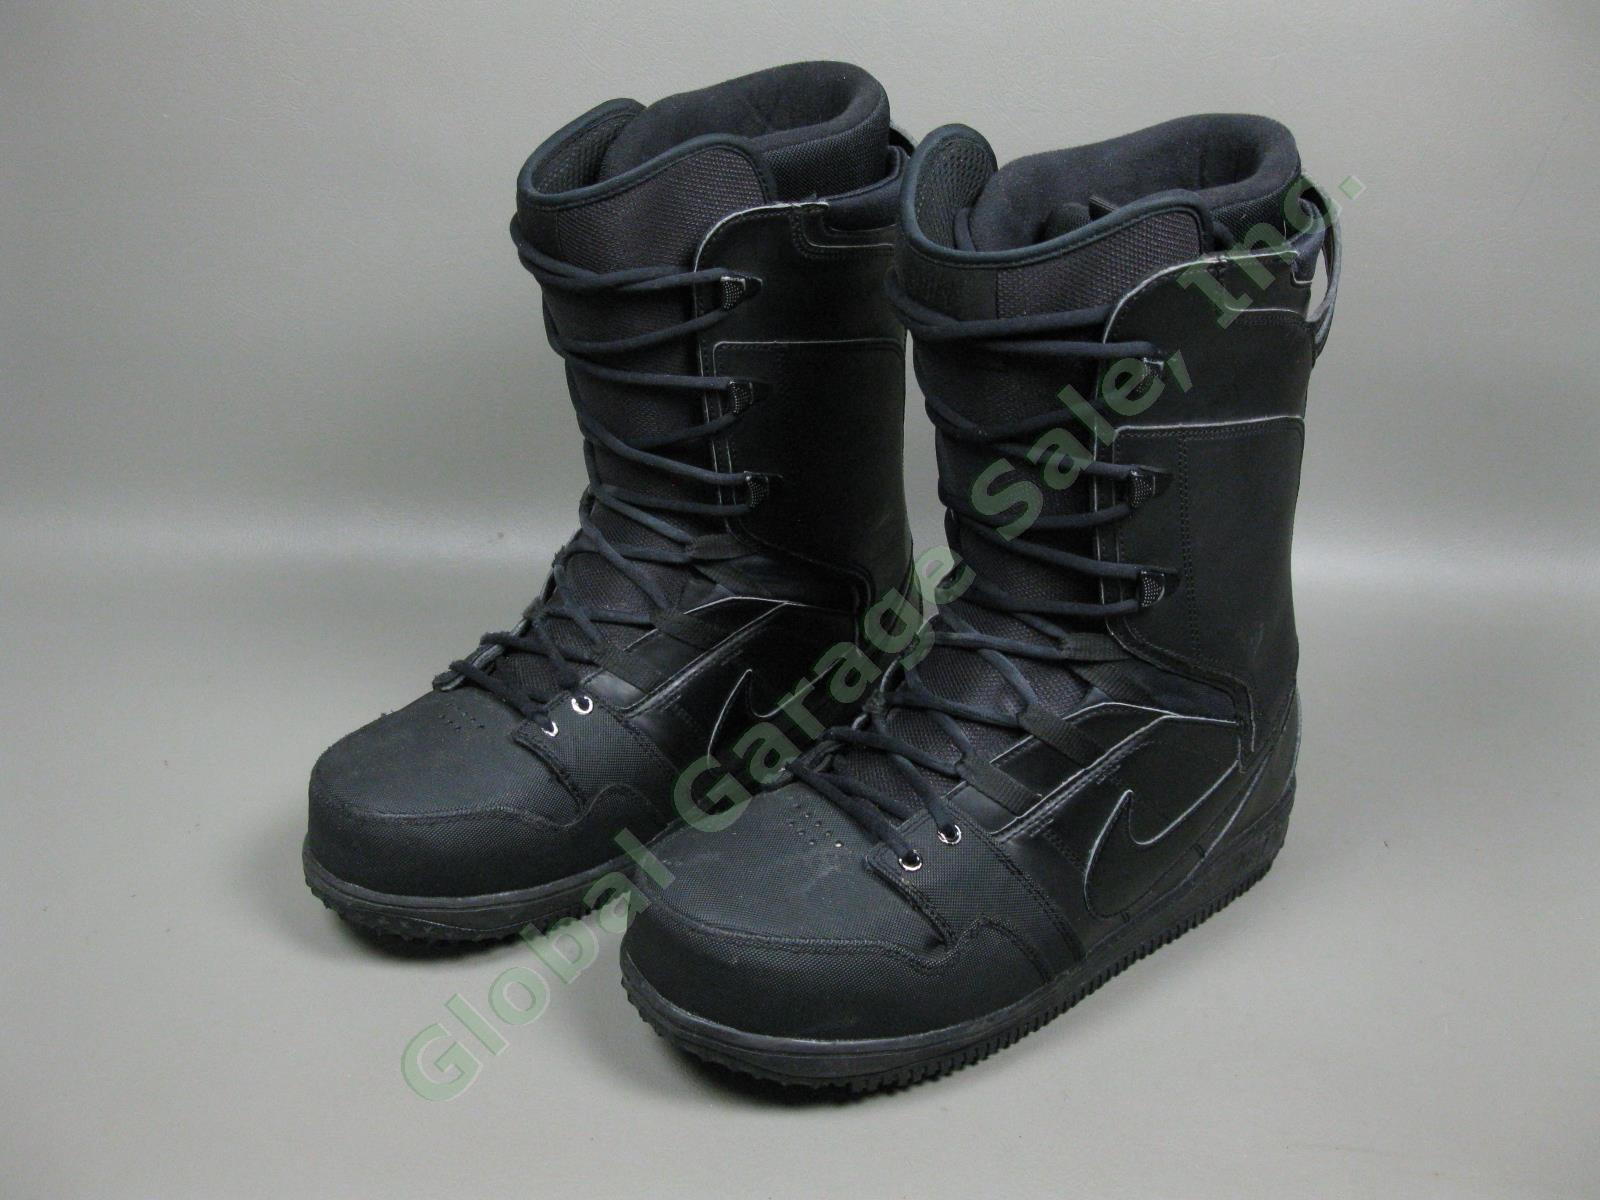 NIKE SB Vapen Snowboard Boots 447125-002 Triple-Black Mens Sz 11.5 Exc Cond!